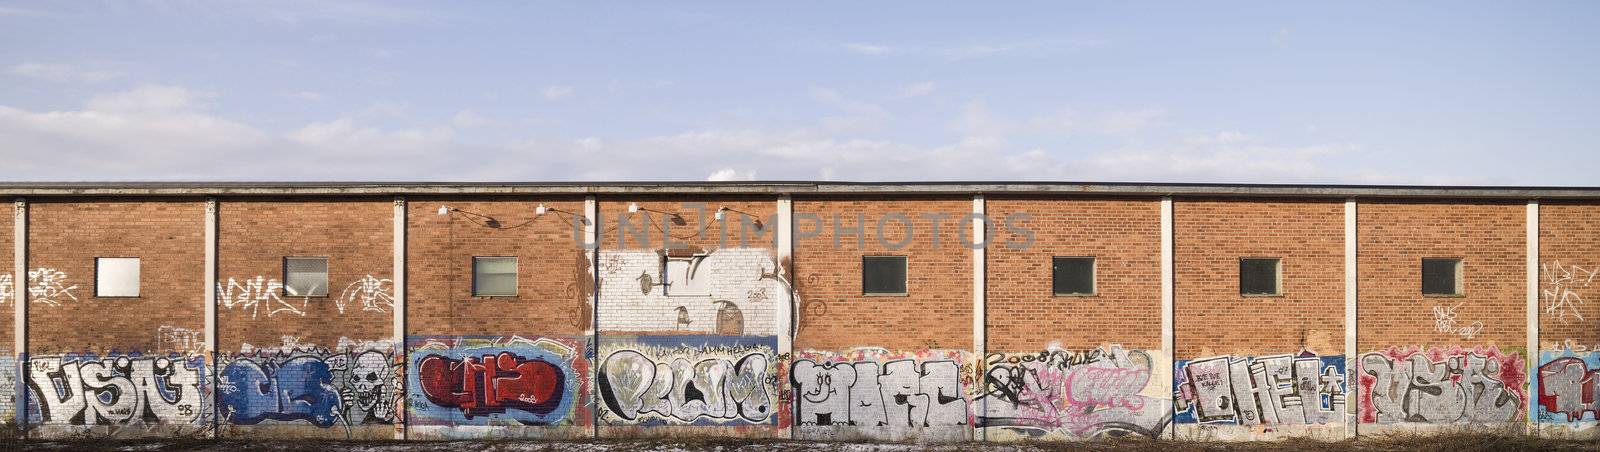 Brickwall with graffiti on by gemenacom